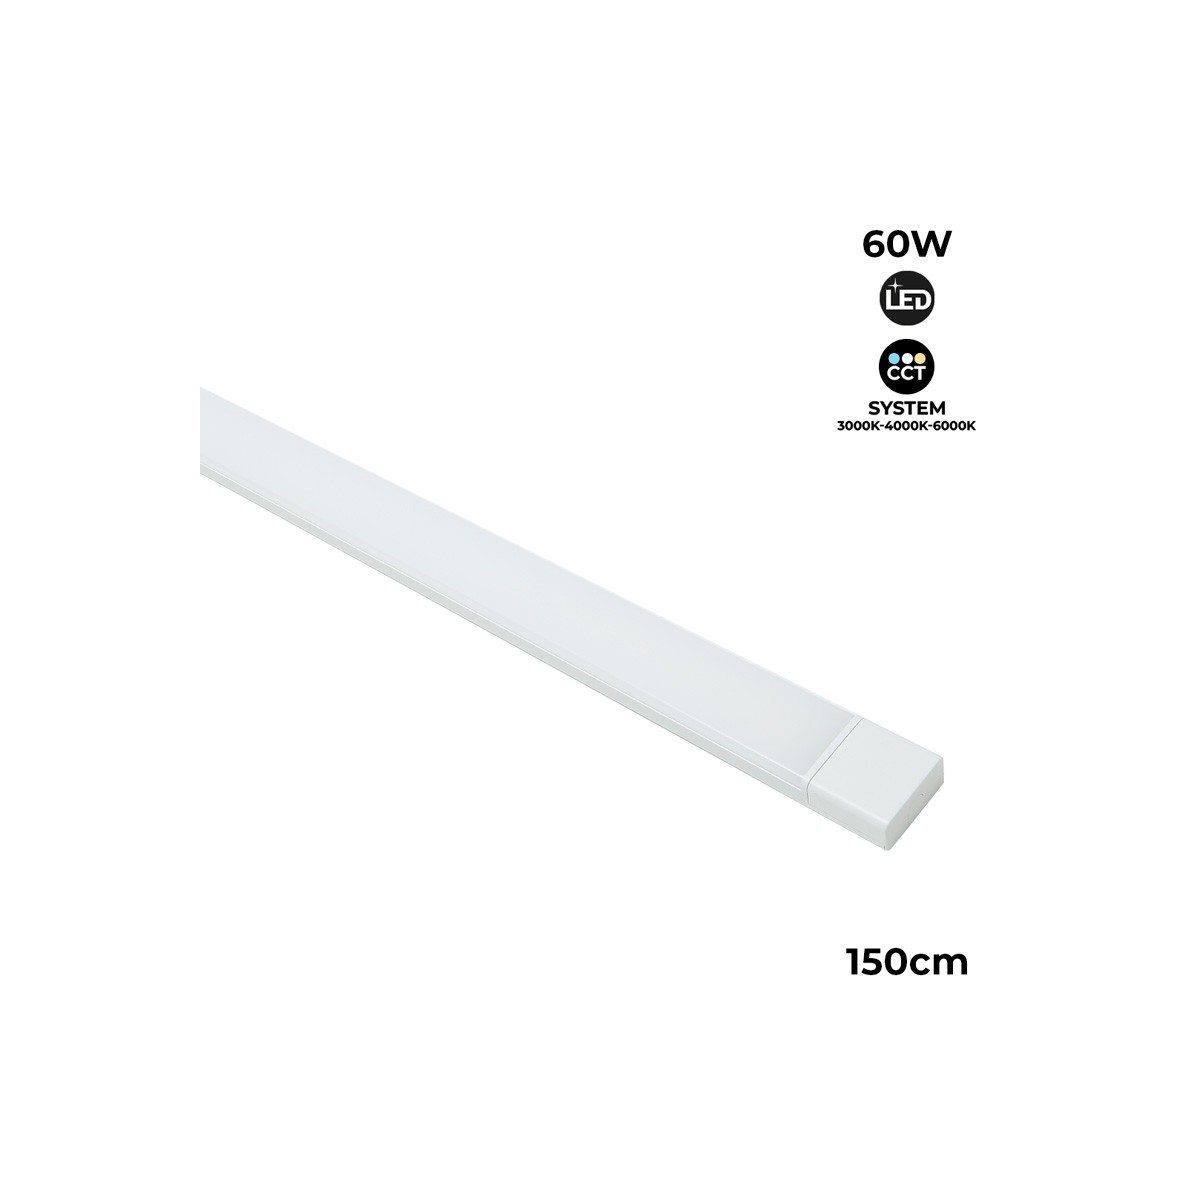 Lineare Hochleistungsleuchte LED CCT - 60W - 150 cm - IP44